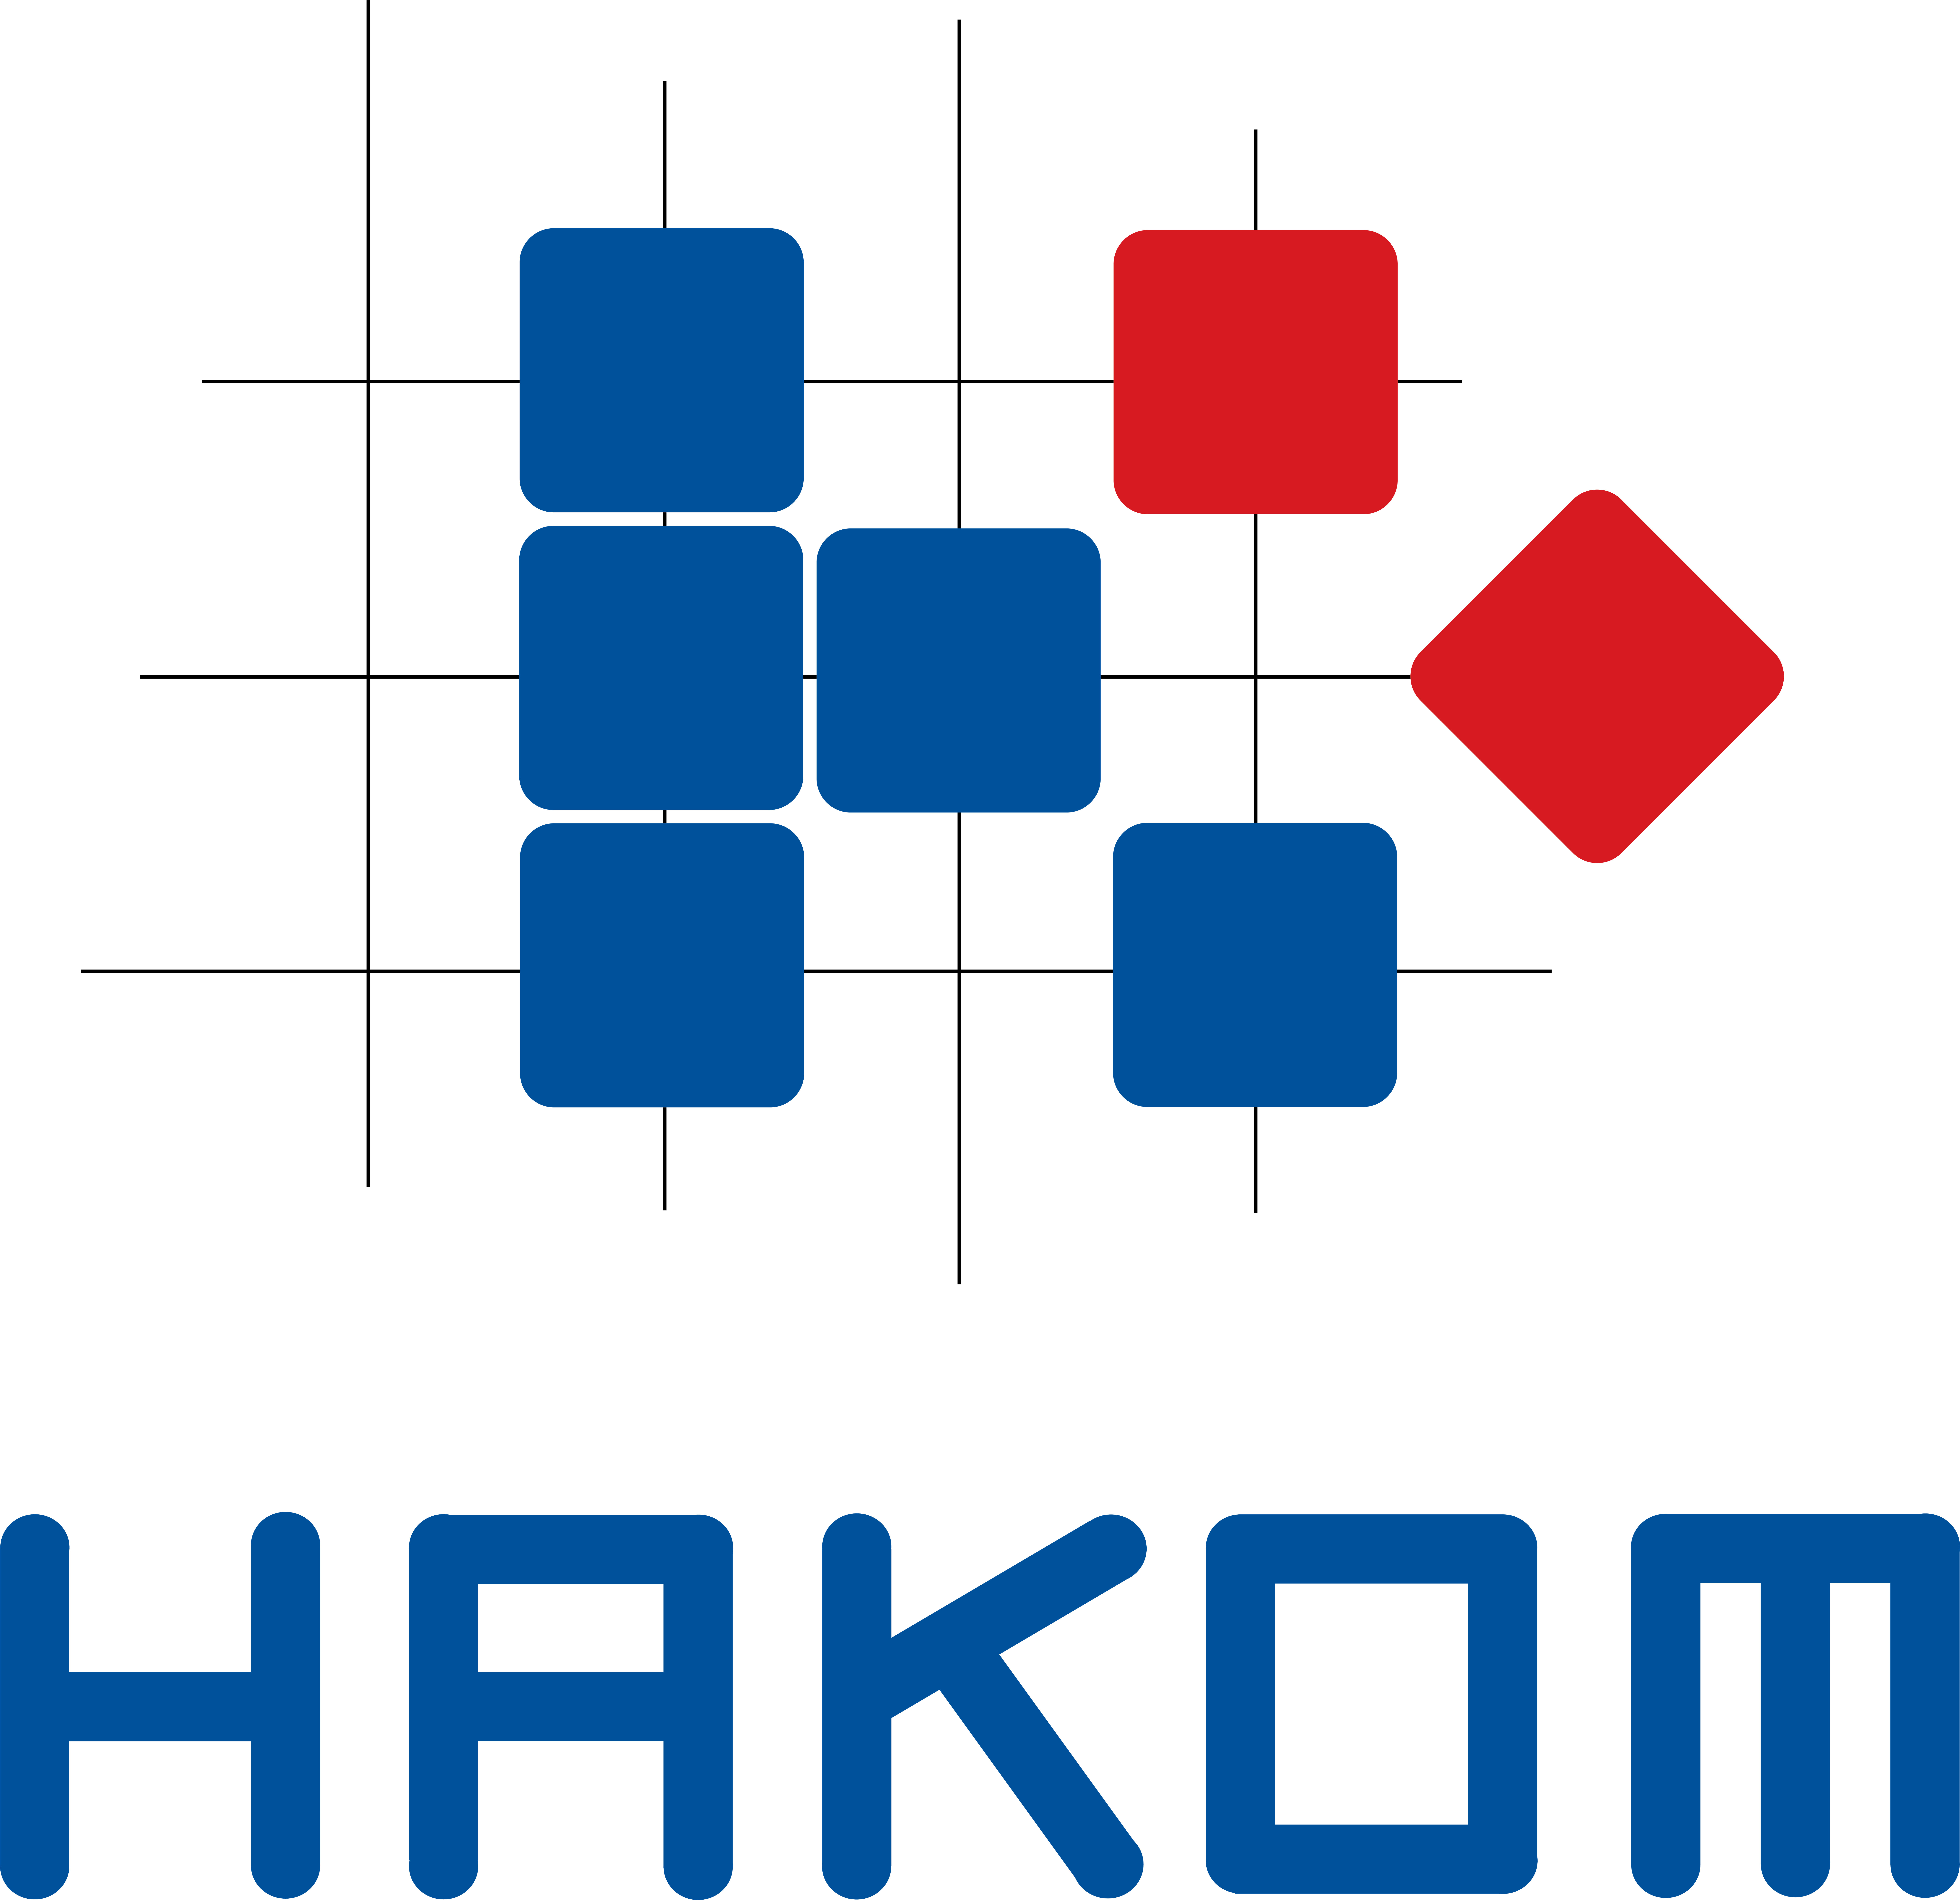 The image shows the HAKOM logoCroatia